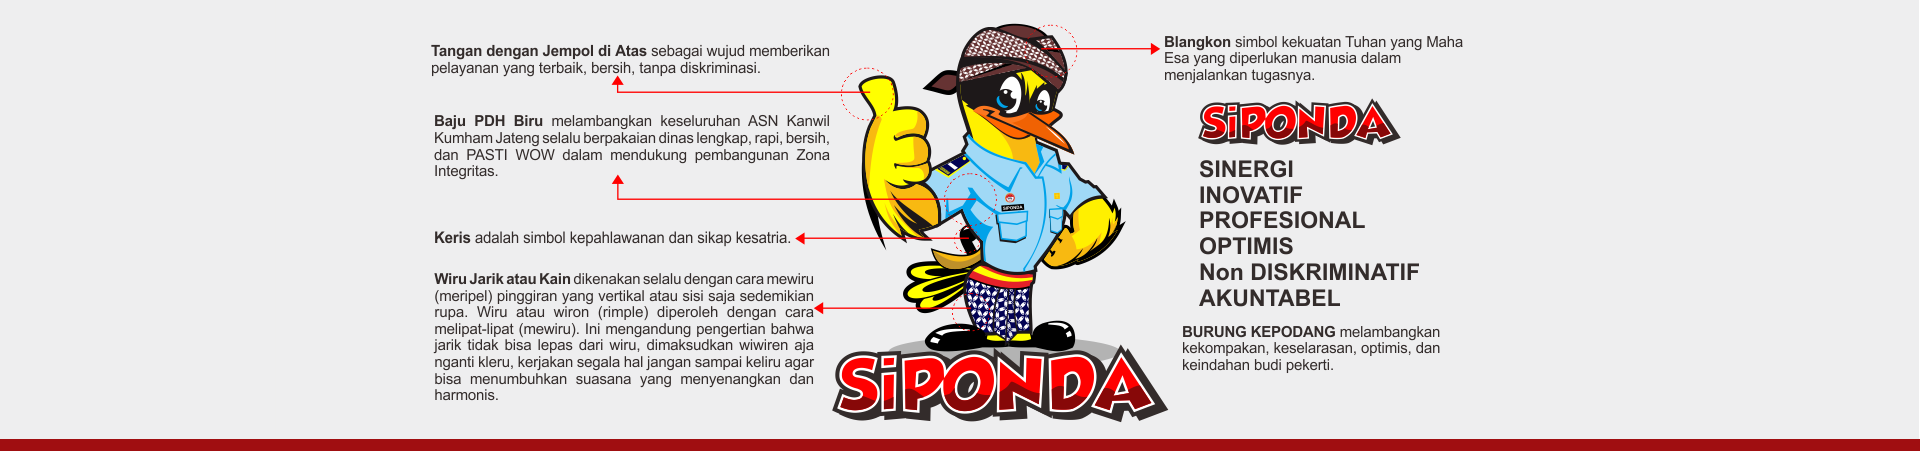 Slide-Siponda-fix-banget